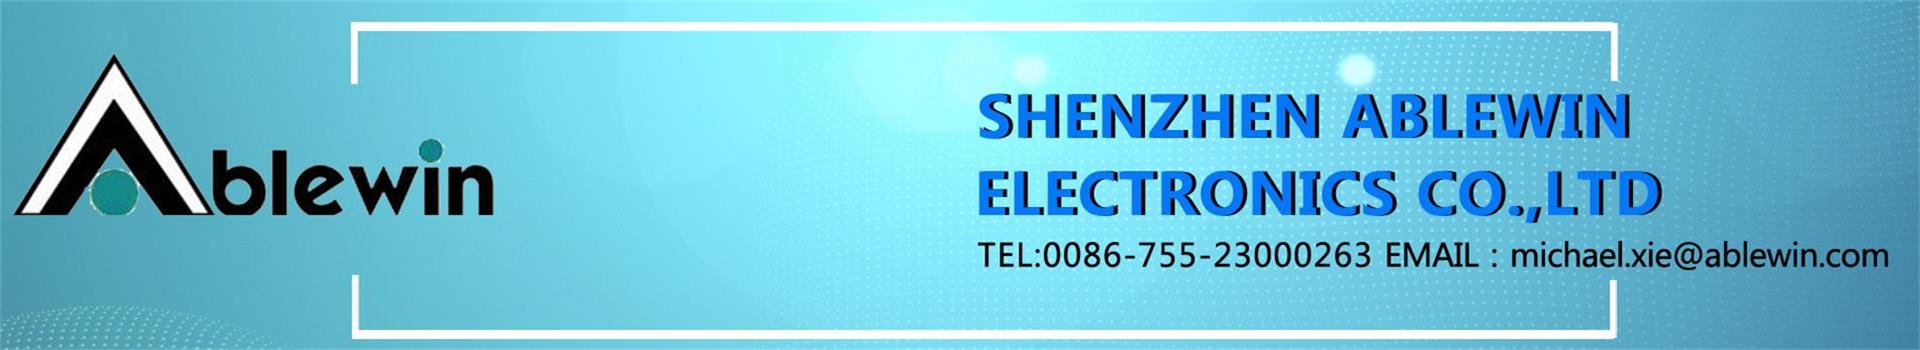 Shenzhen Ablewin Electronics Co.Ltd